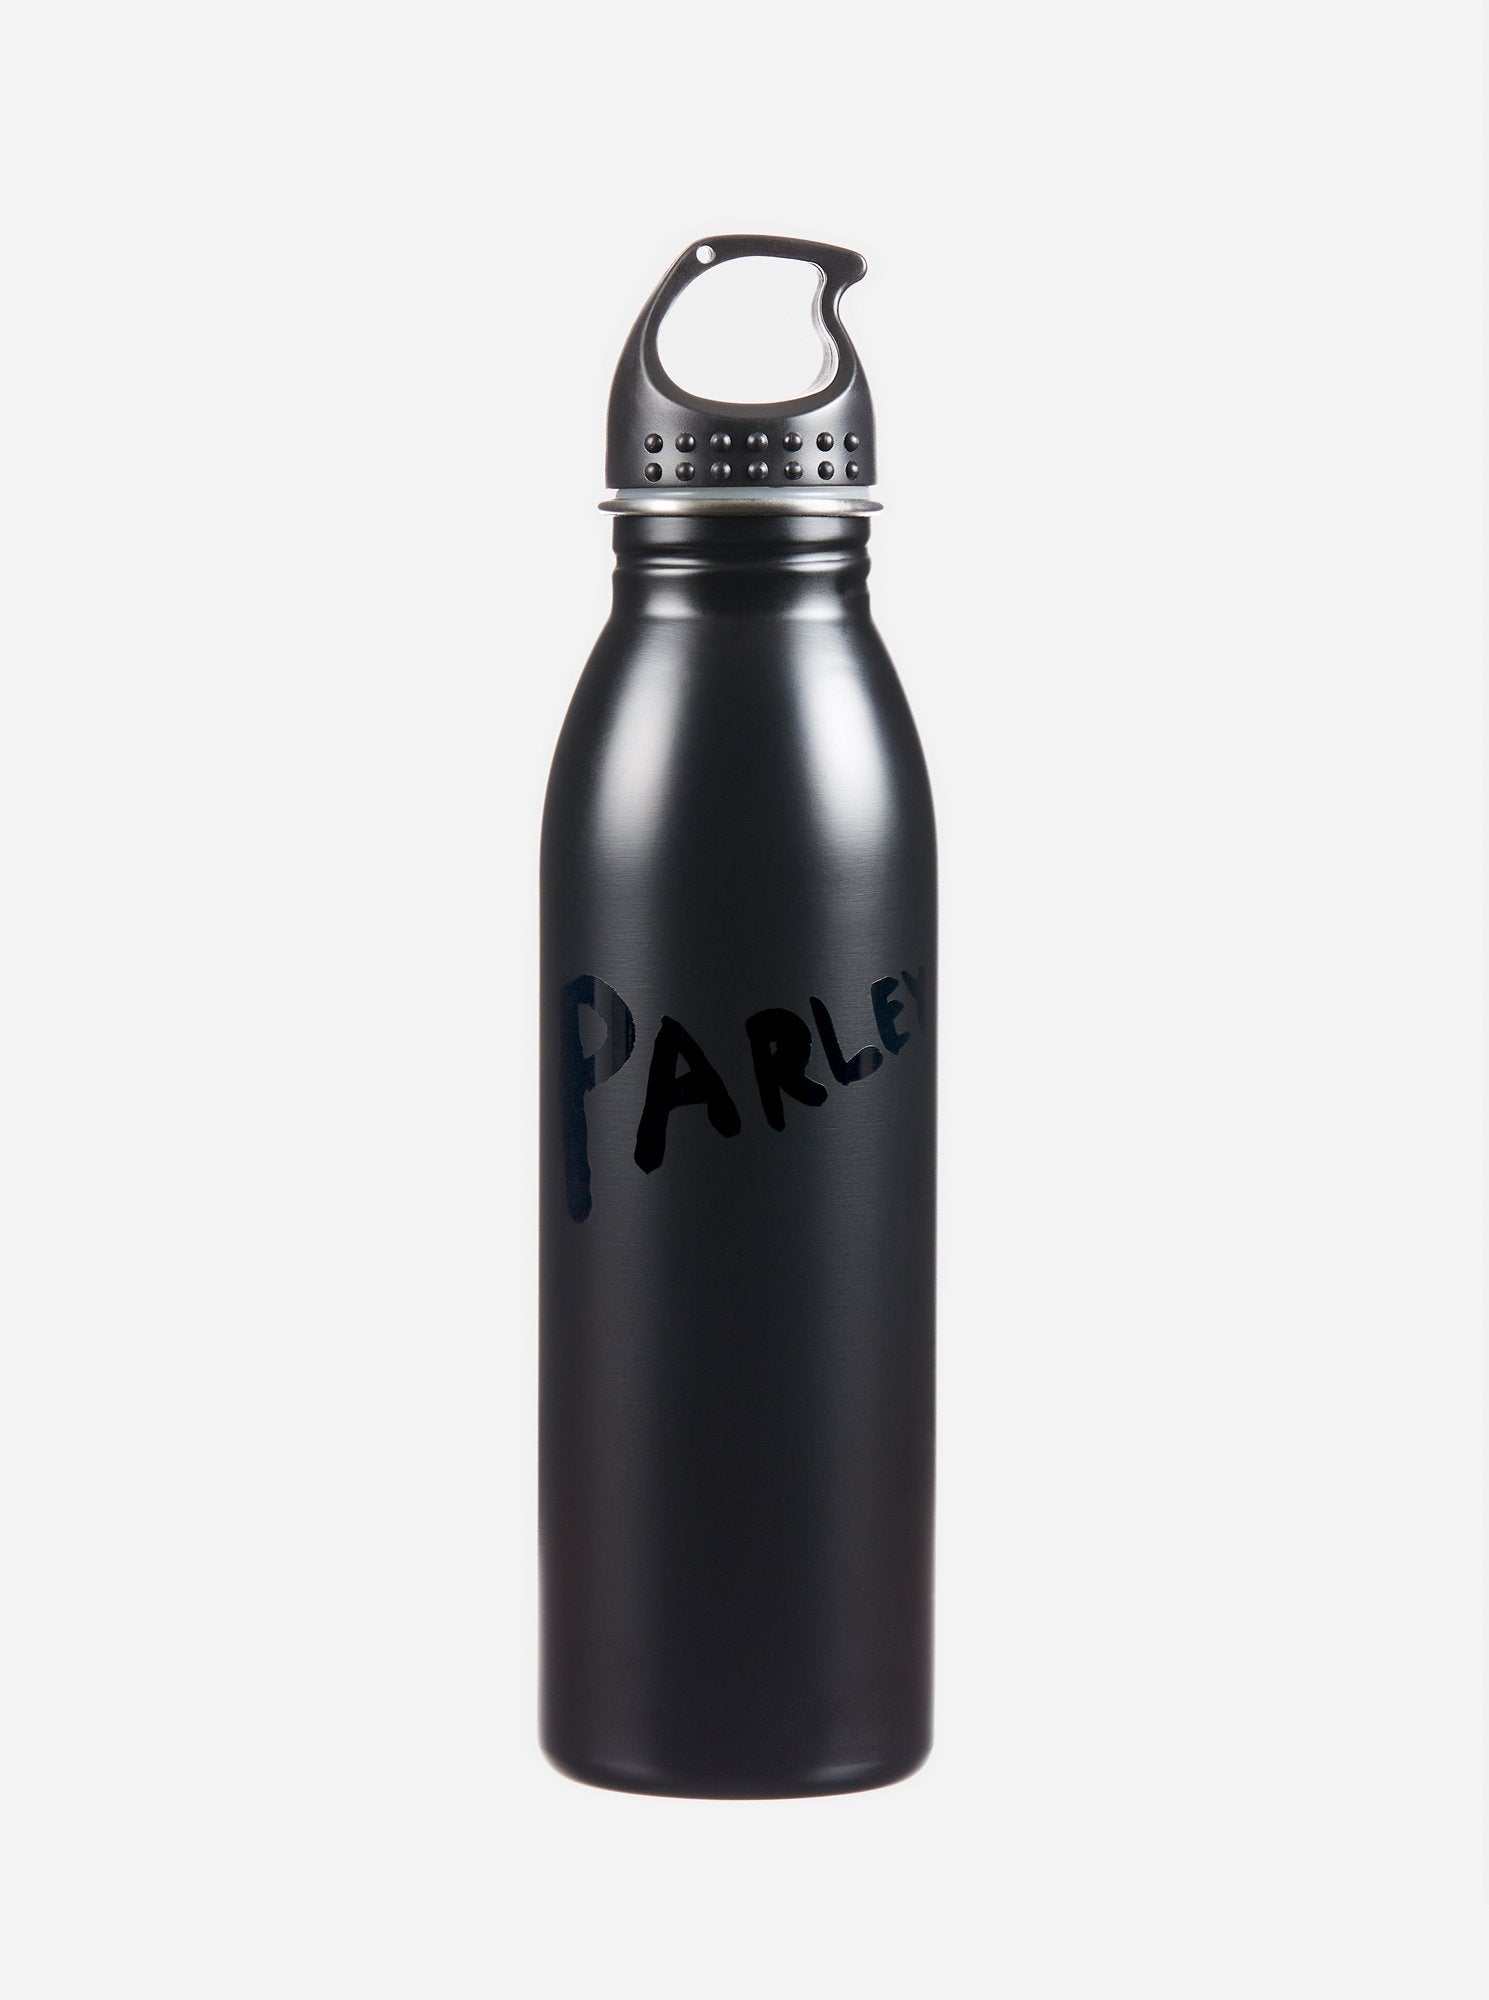 Parley Water Bottle